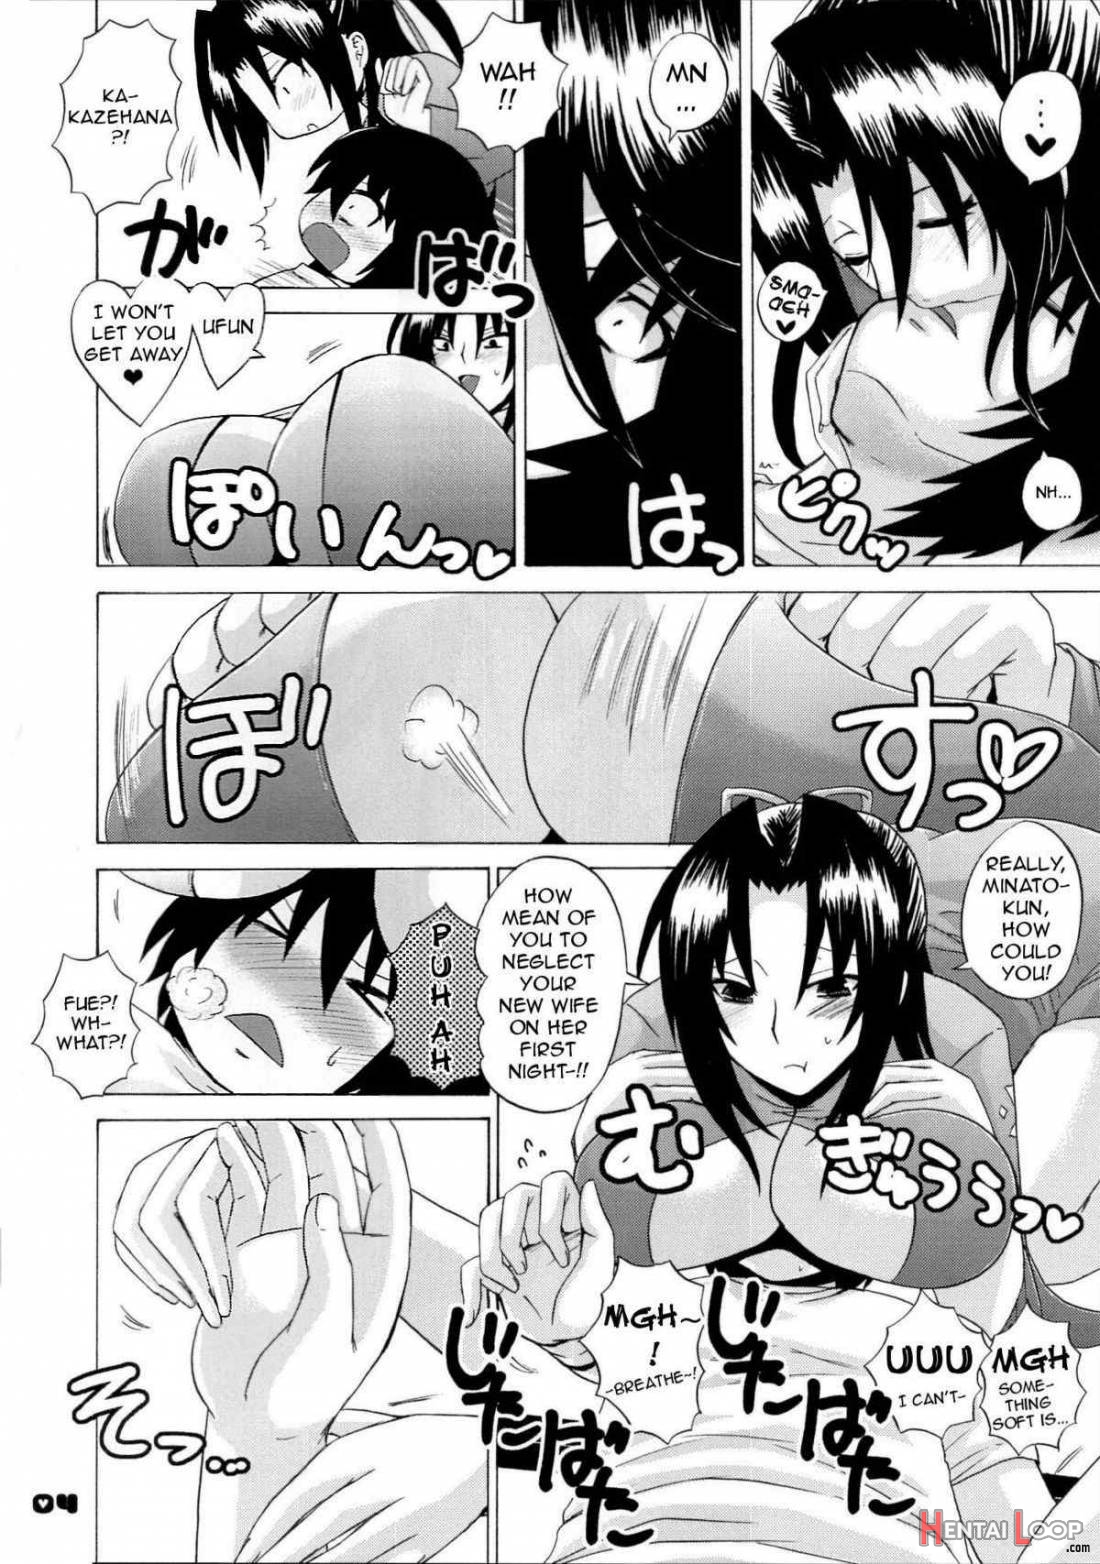 Kazehana-san Wa Ore No Sekirei page 3